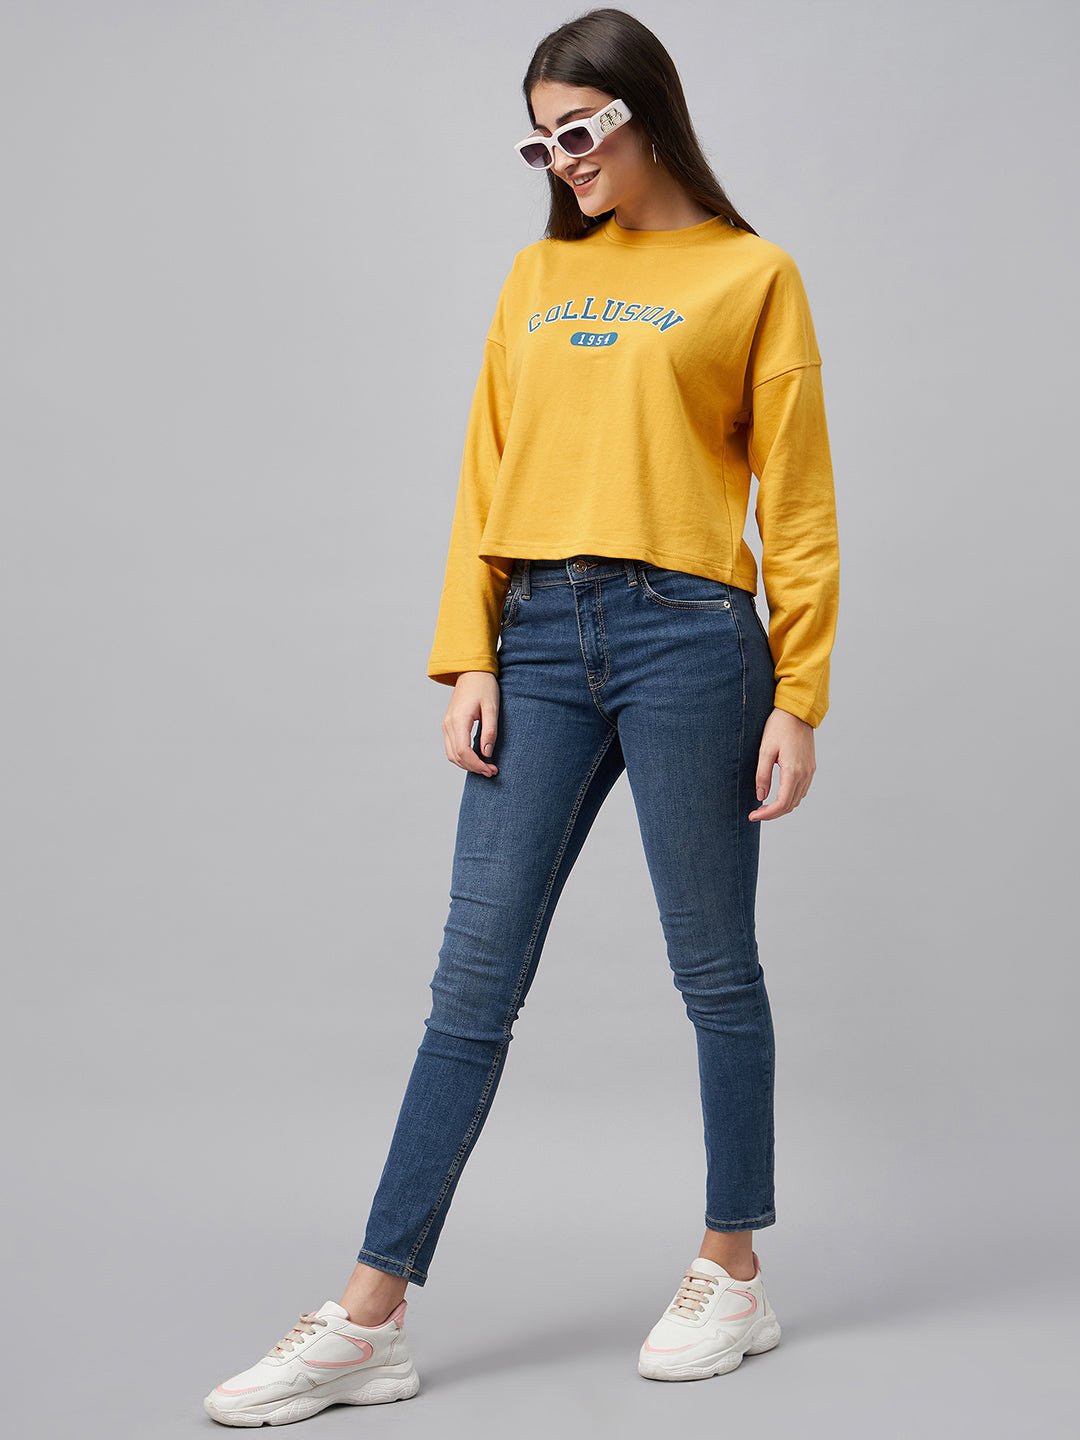 Yellow Typography Print Round Neck Sweatshirt - clubyork